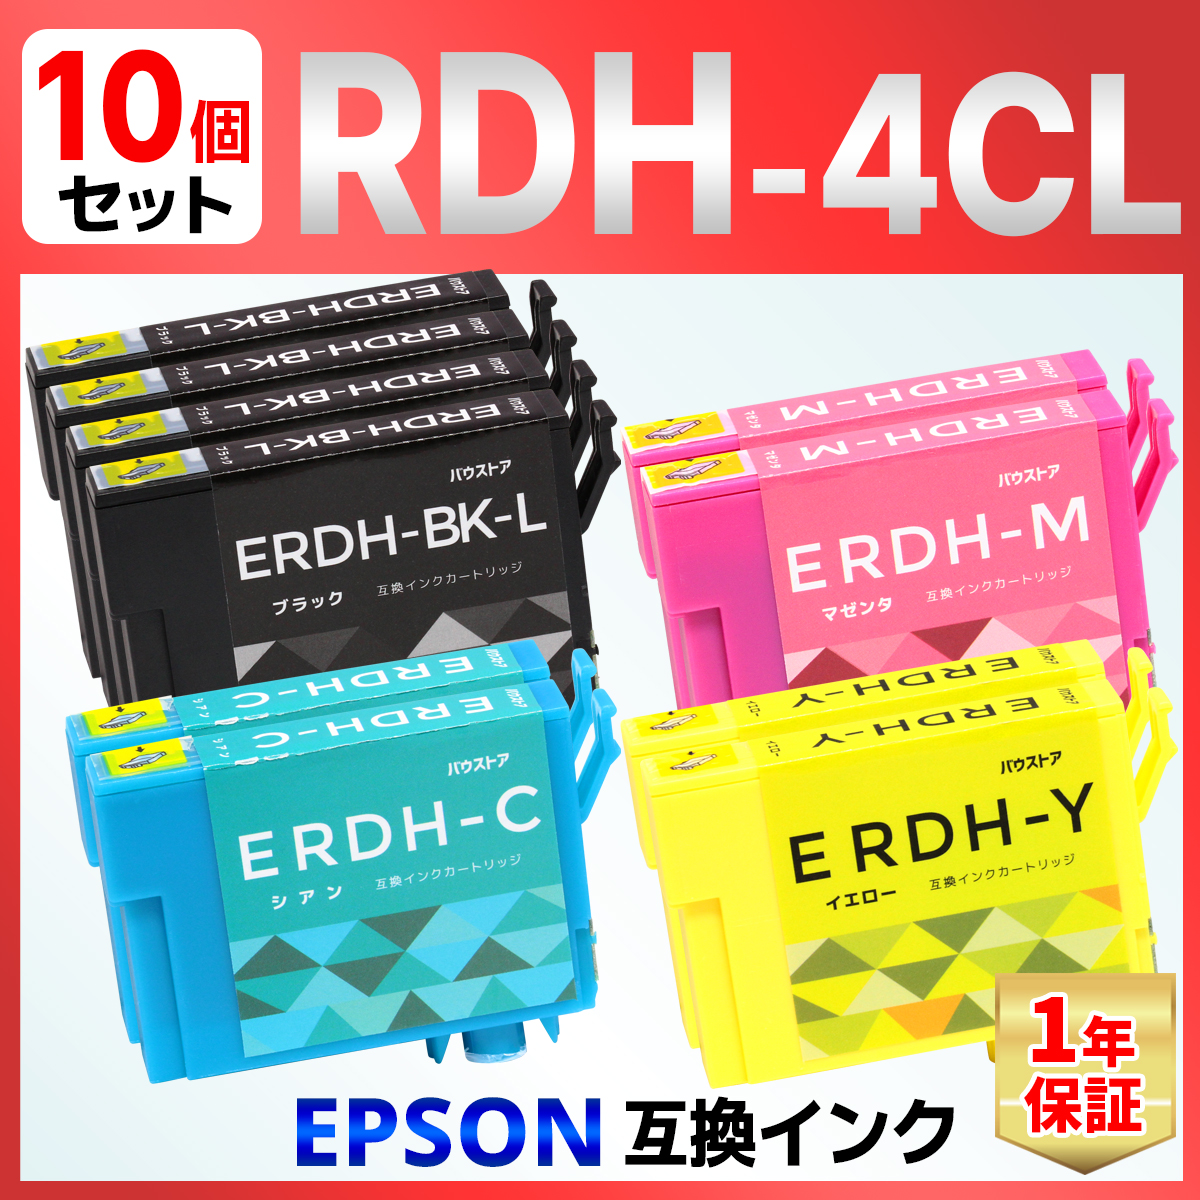 RDH-4CL RDH リコーダー 互換インク １０個セット EPSON エプソン PX-048A PX-049A